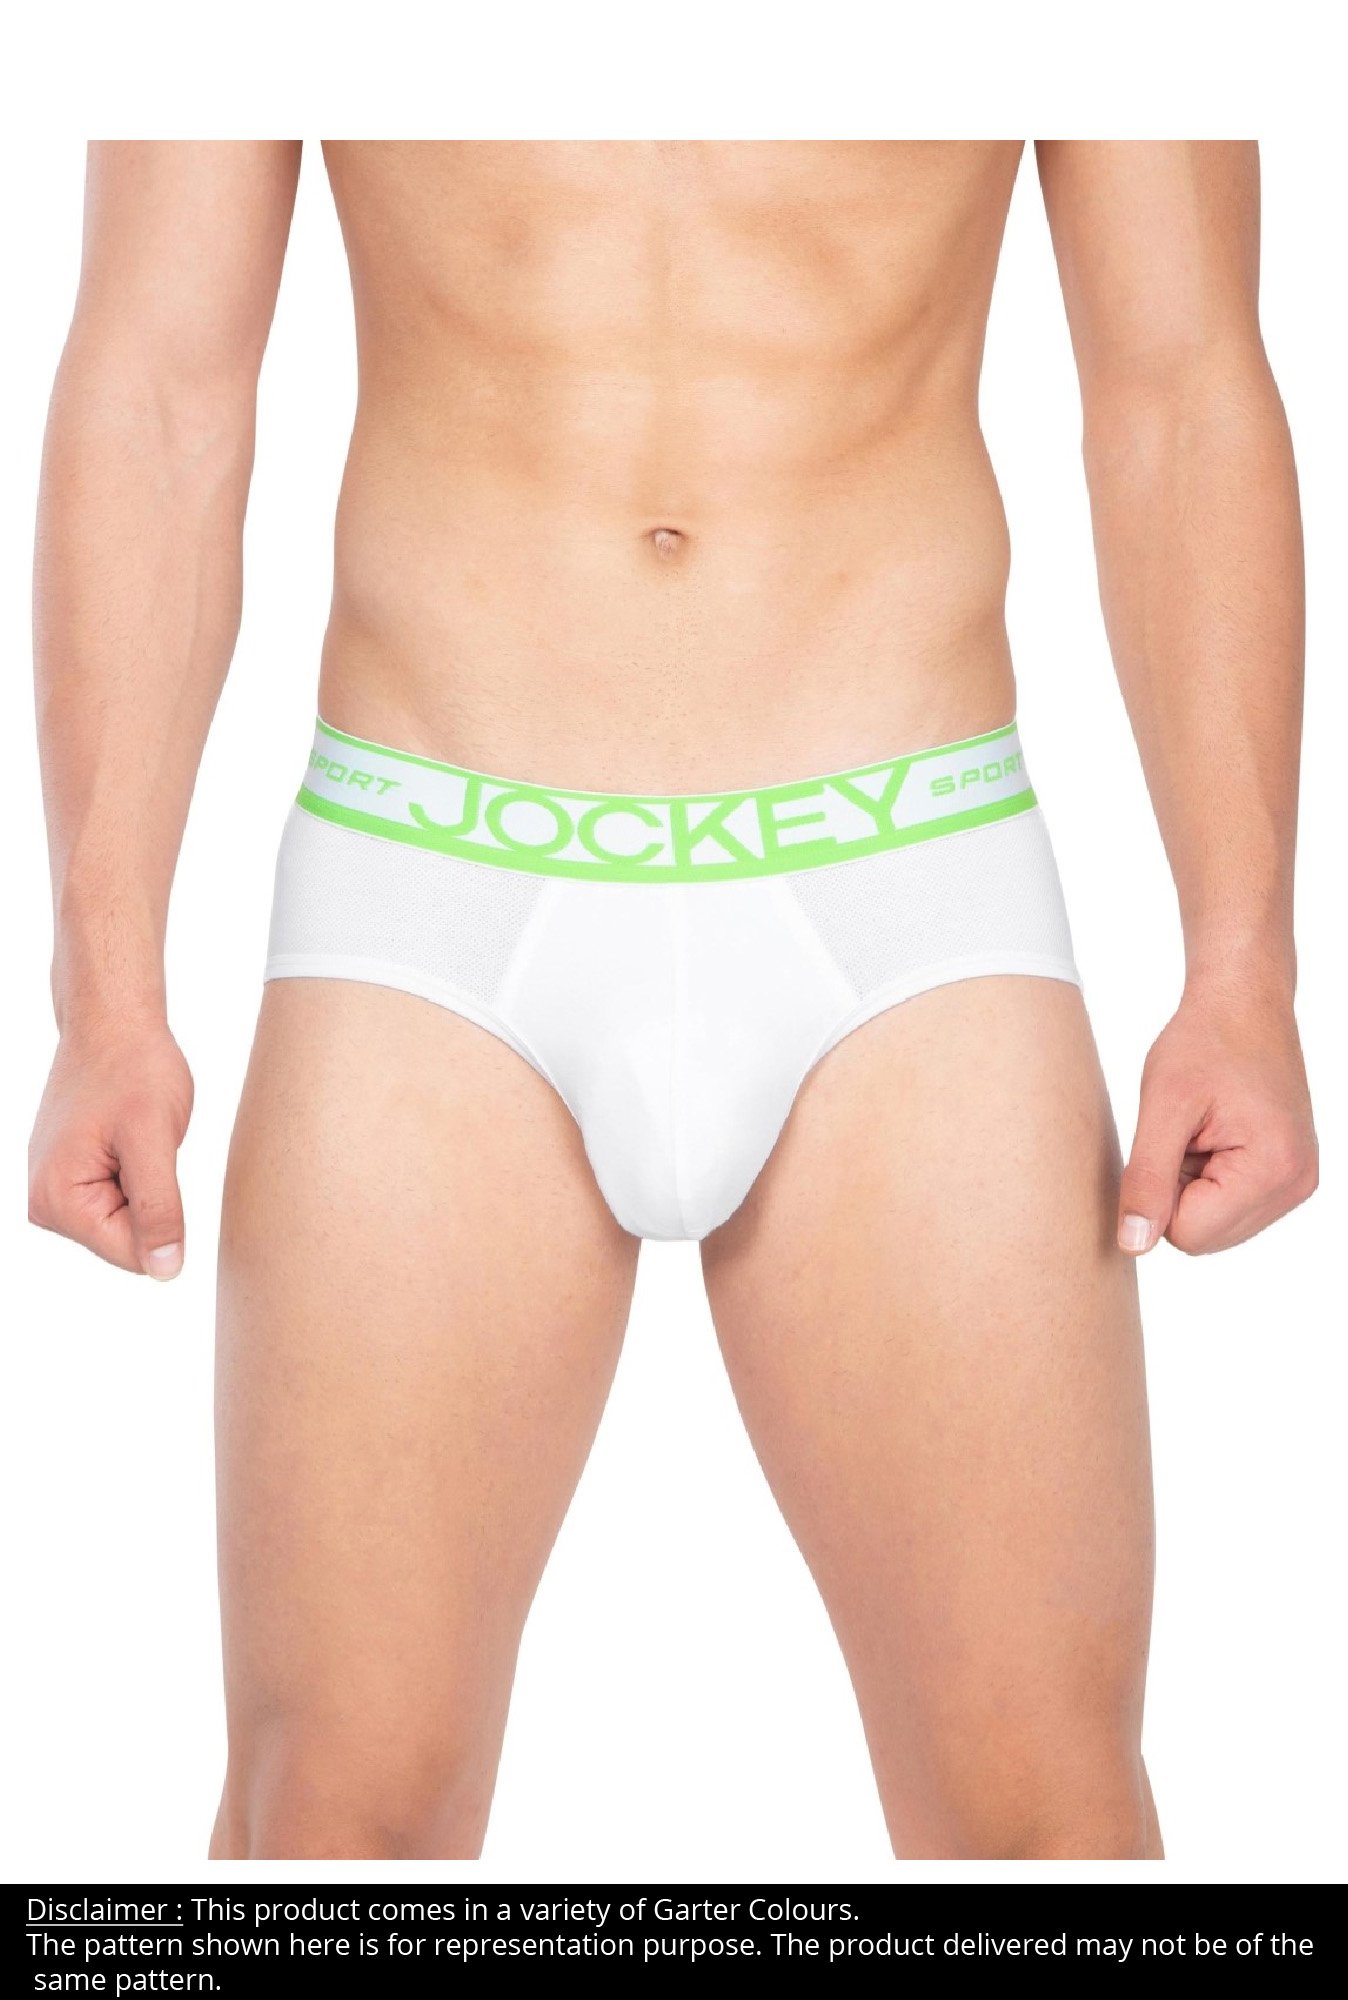 Jockey 50459940067 Men's Underwear, Size 36 - White (5 Piece